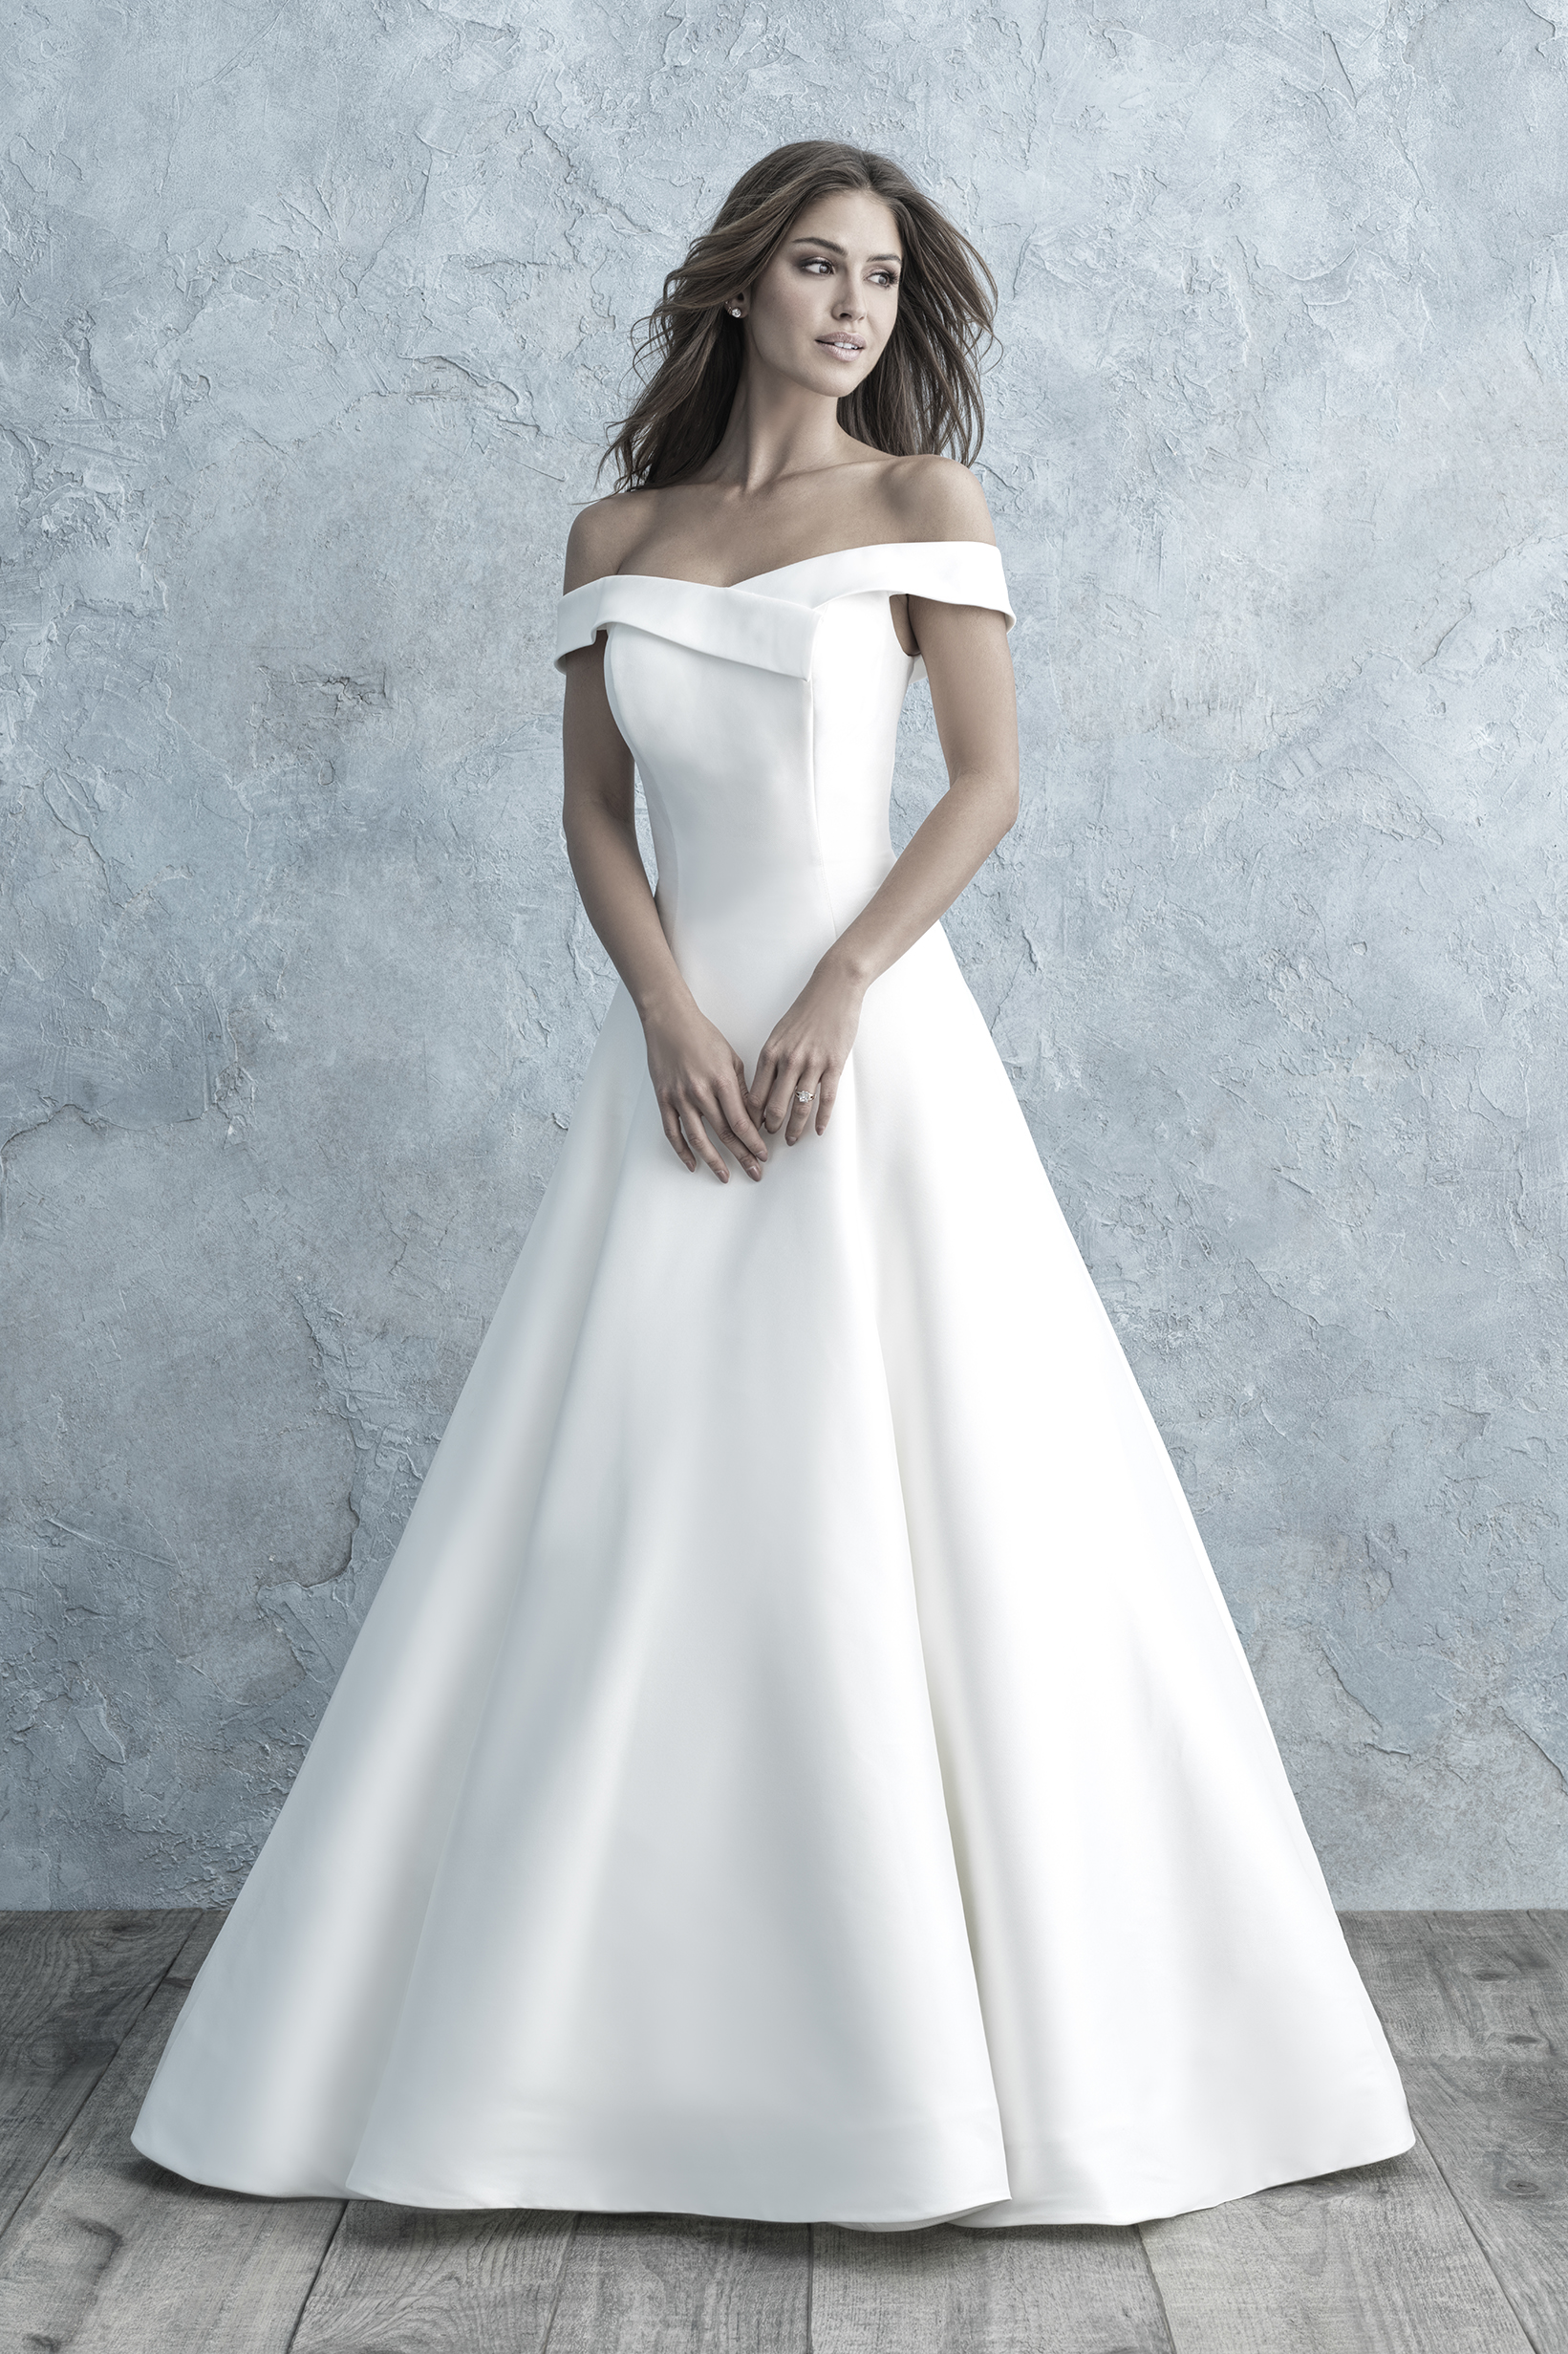 8 Allure Bridals Wedding Dress   Chic, Off The Shoulder Gown